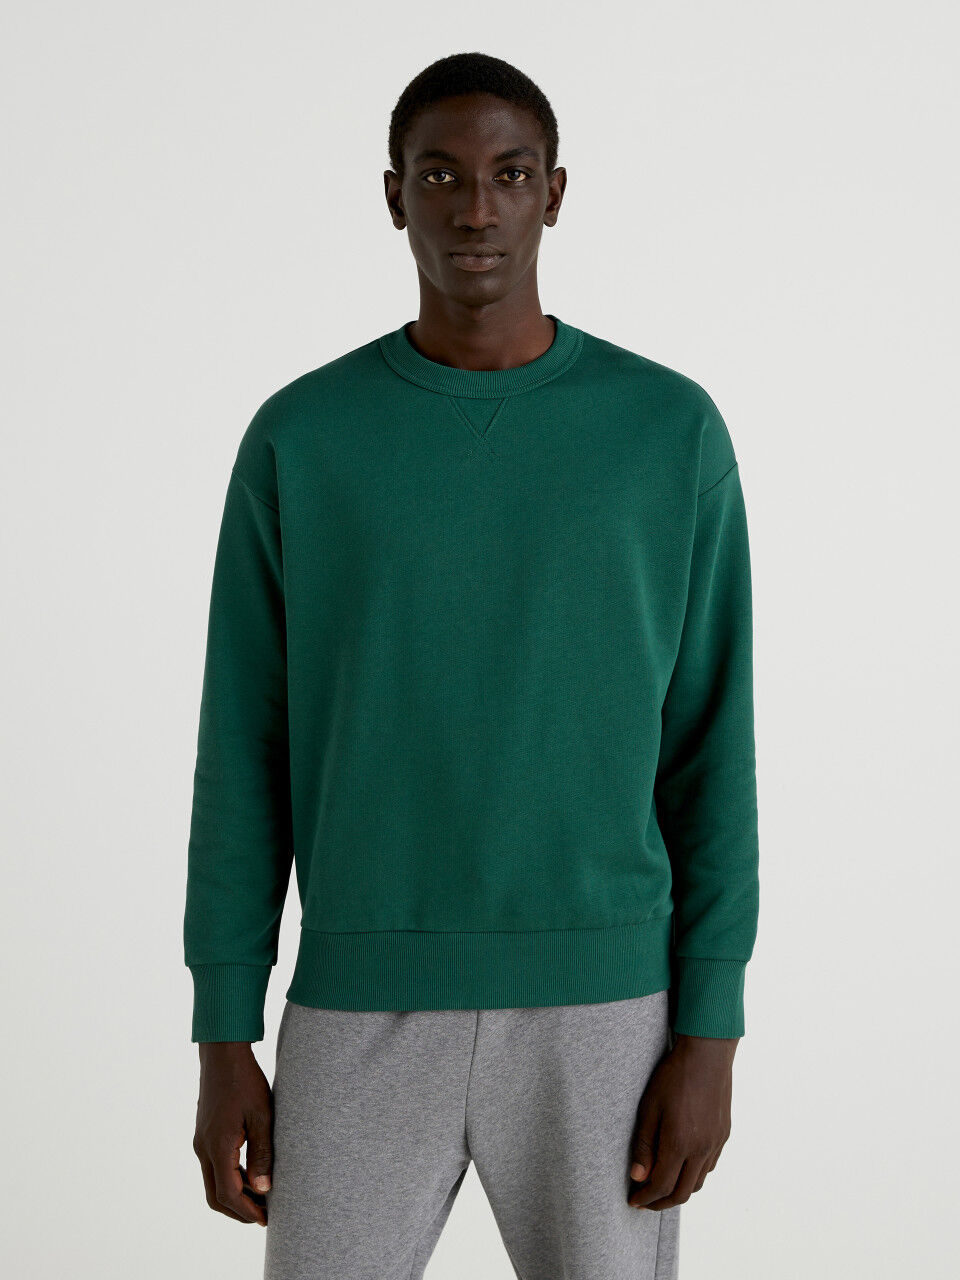 Kleding Herenkleding Hoodies & Sweatshirts Sweatshirts Verenigde Kleur van Benetton Crewneck Sweatshirt 